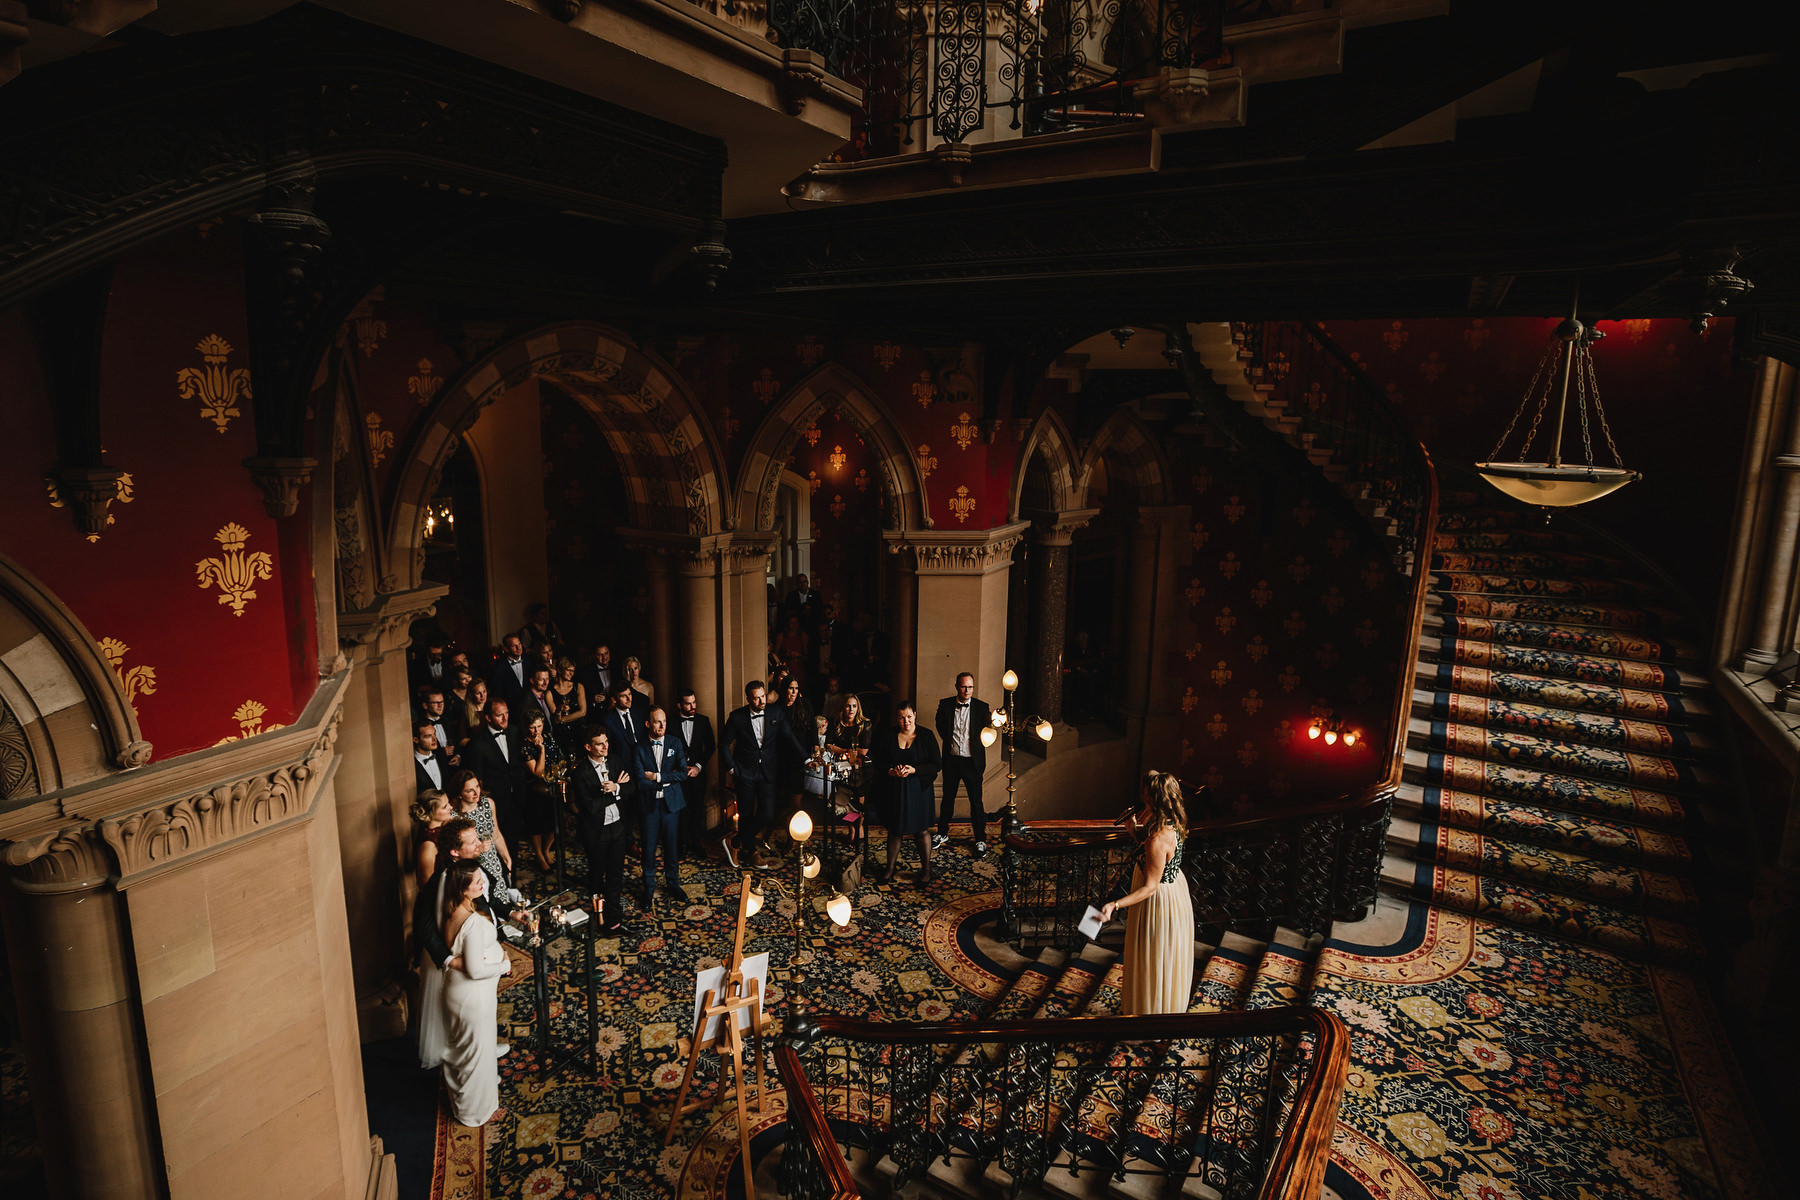 St Pancras Renaissance Hotel Wedding Photography